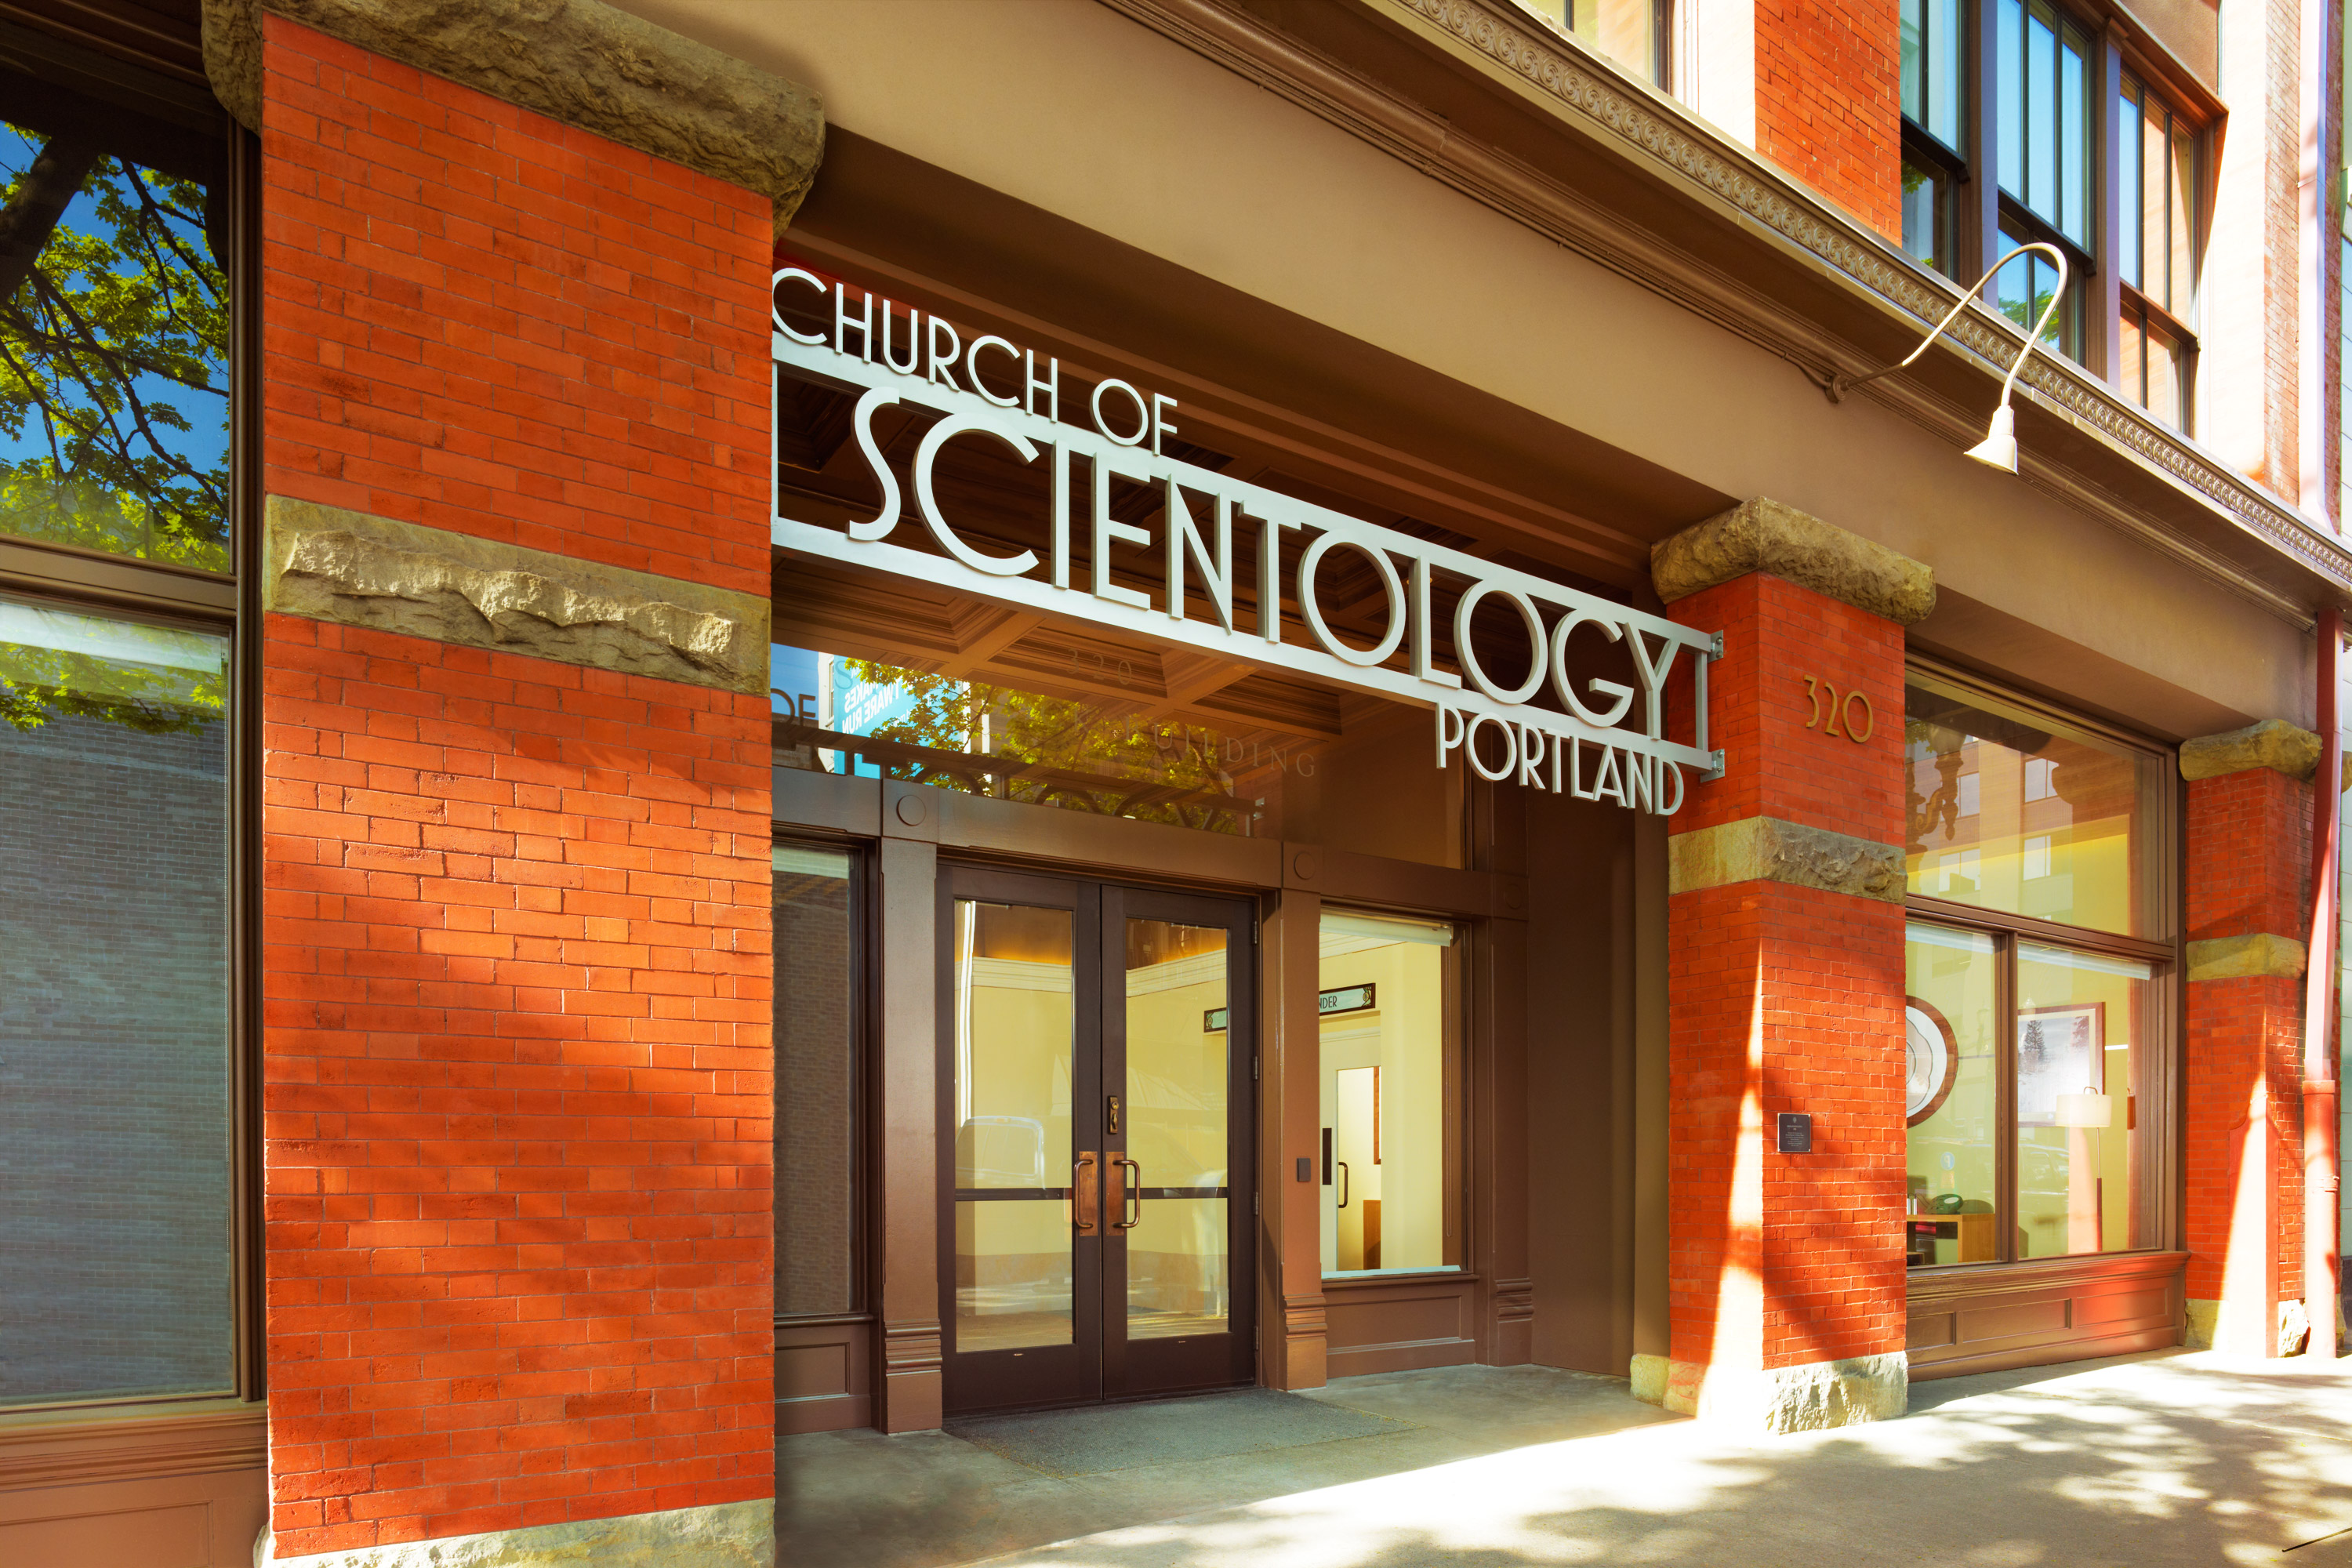 http://f.edgesuite.net/data/www.scientology.org/files/ptl/sherlock-building-church-of-scientology-portland.jpg